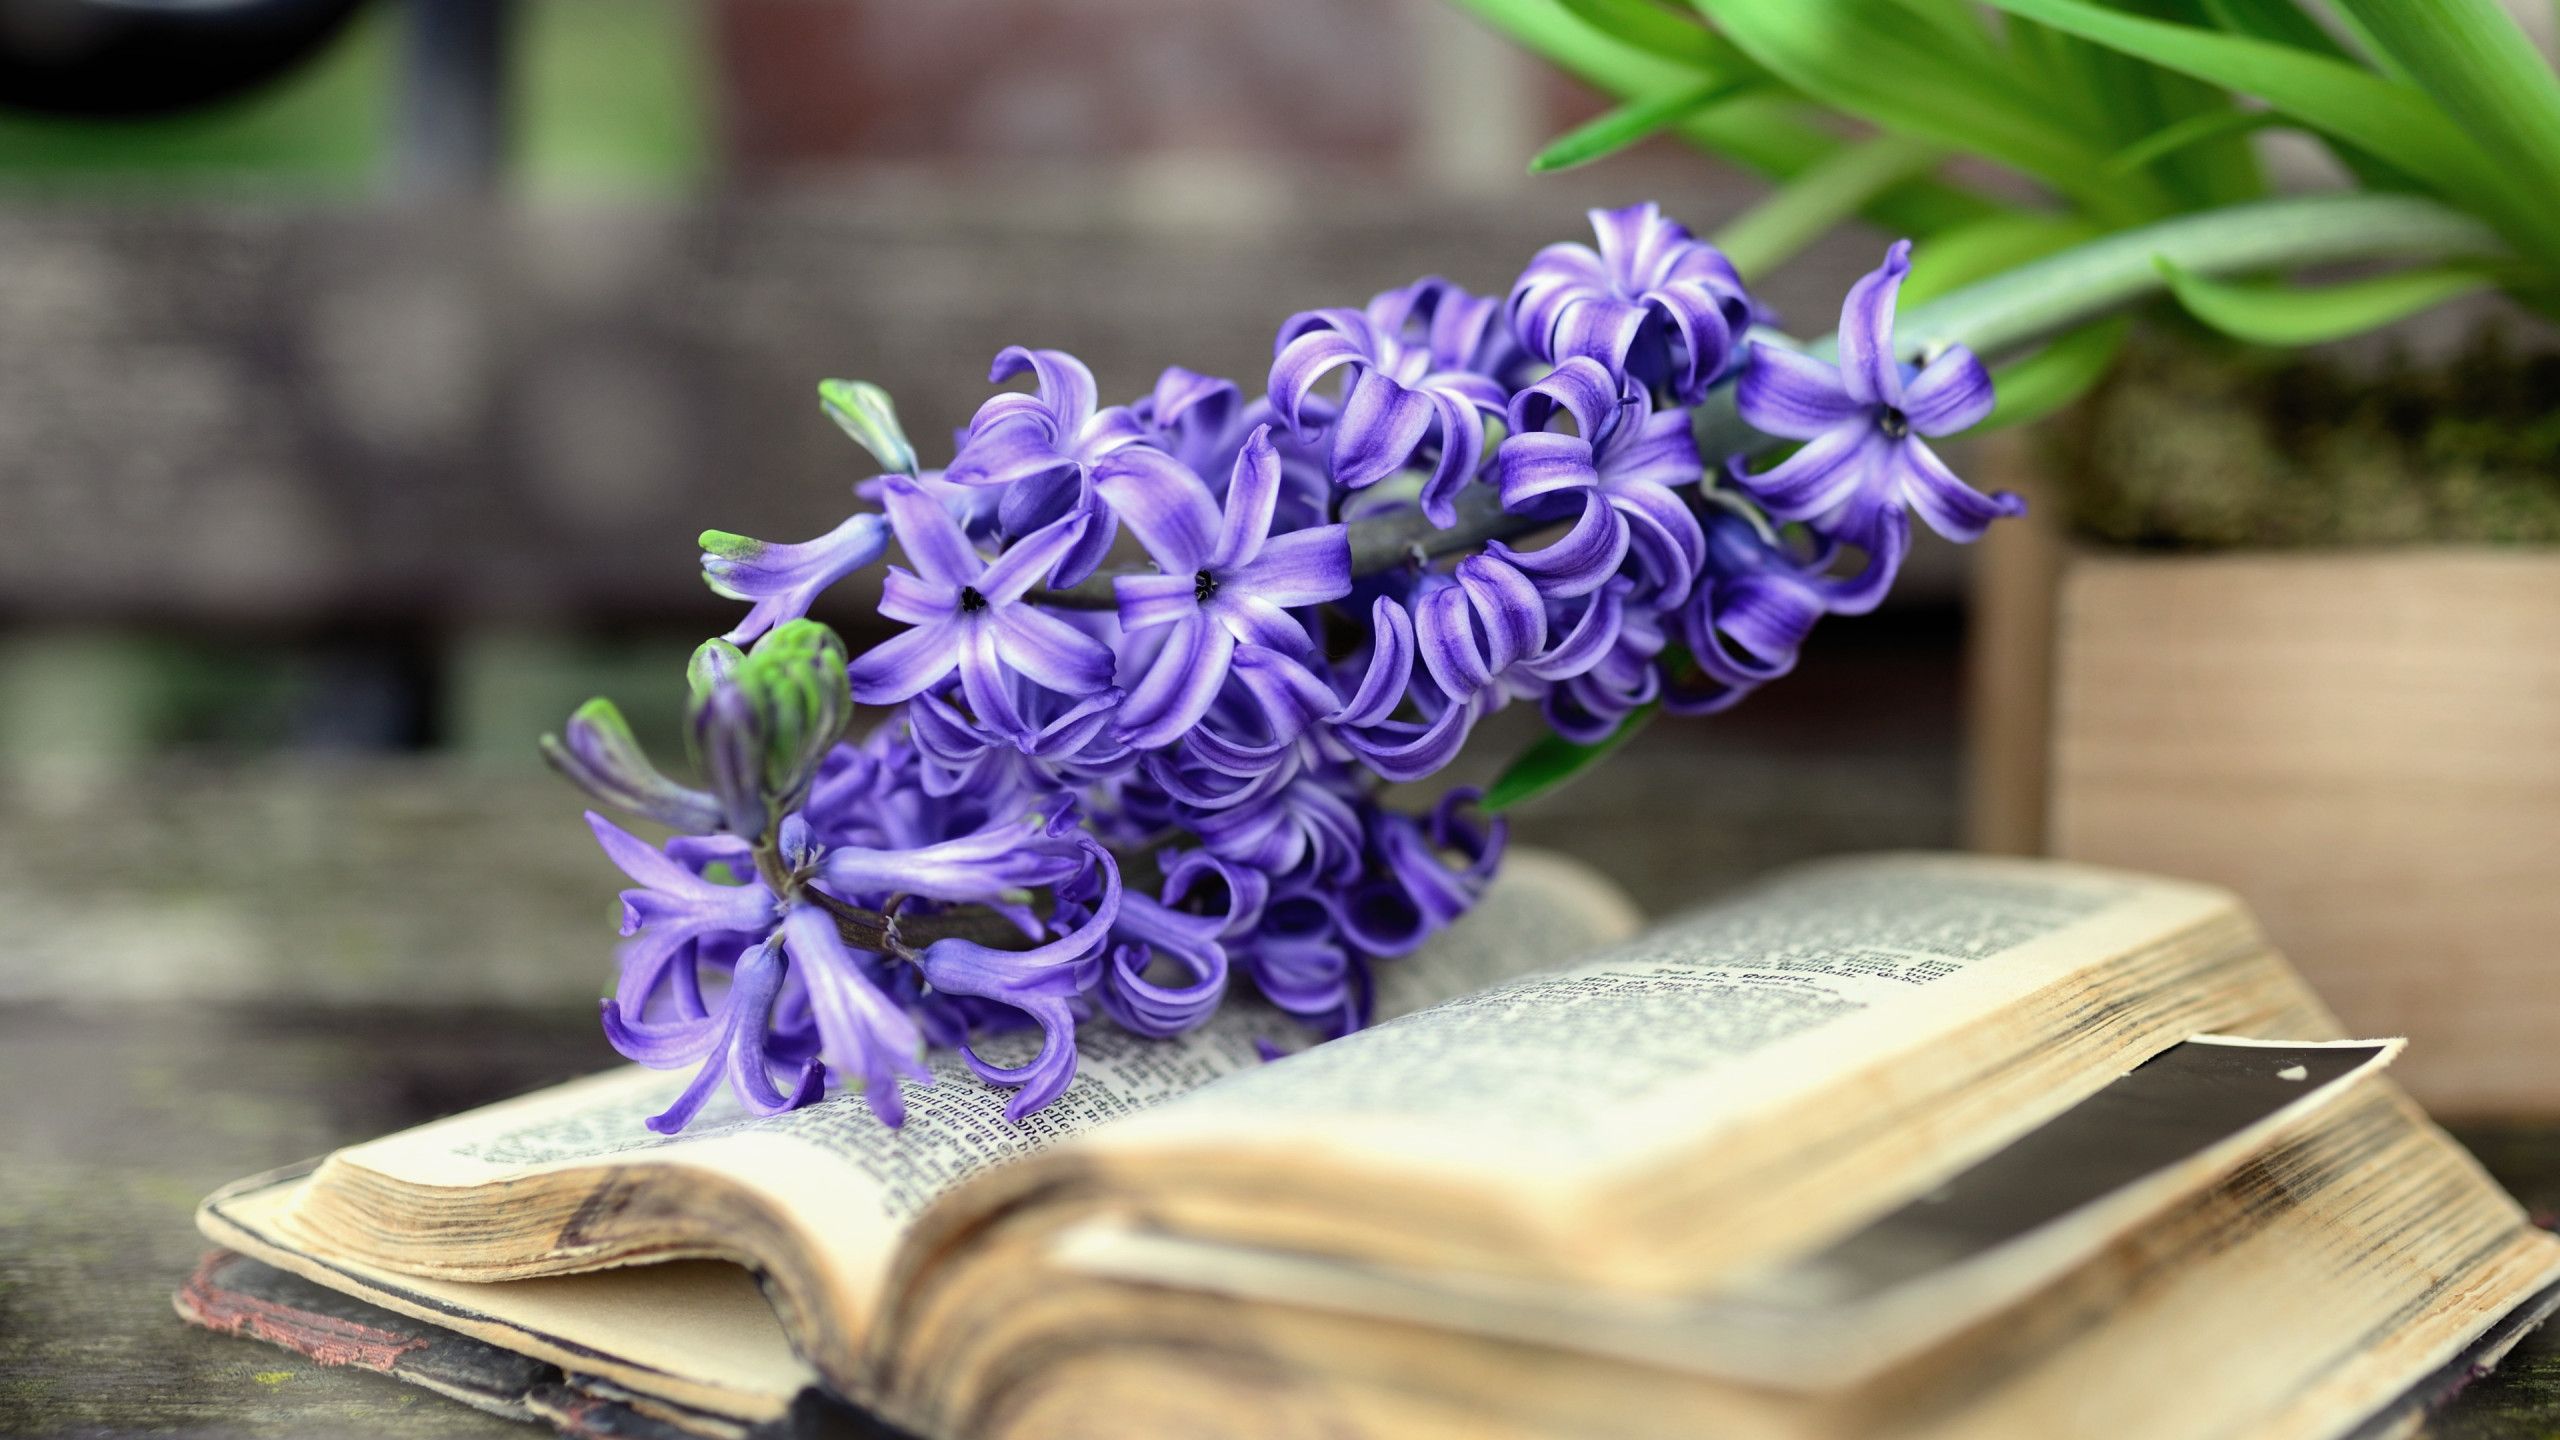 Download wallpaper: Hyacinth Spring flowers 2560x1440